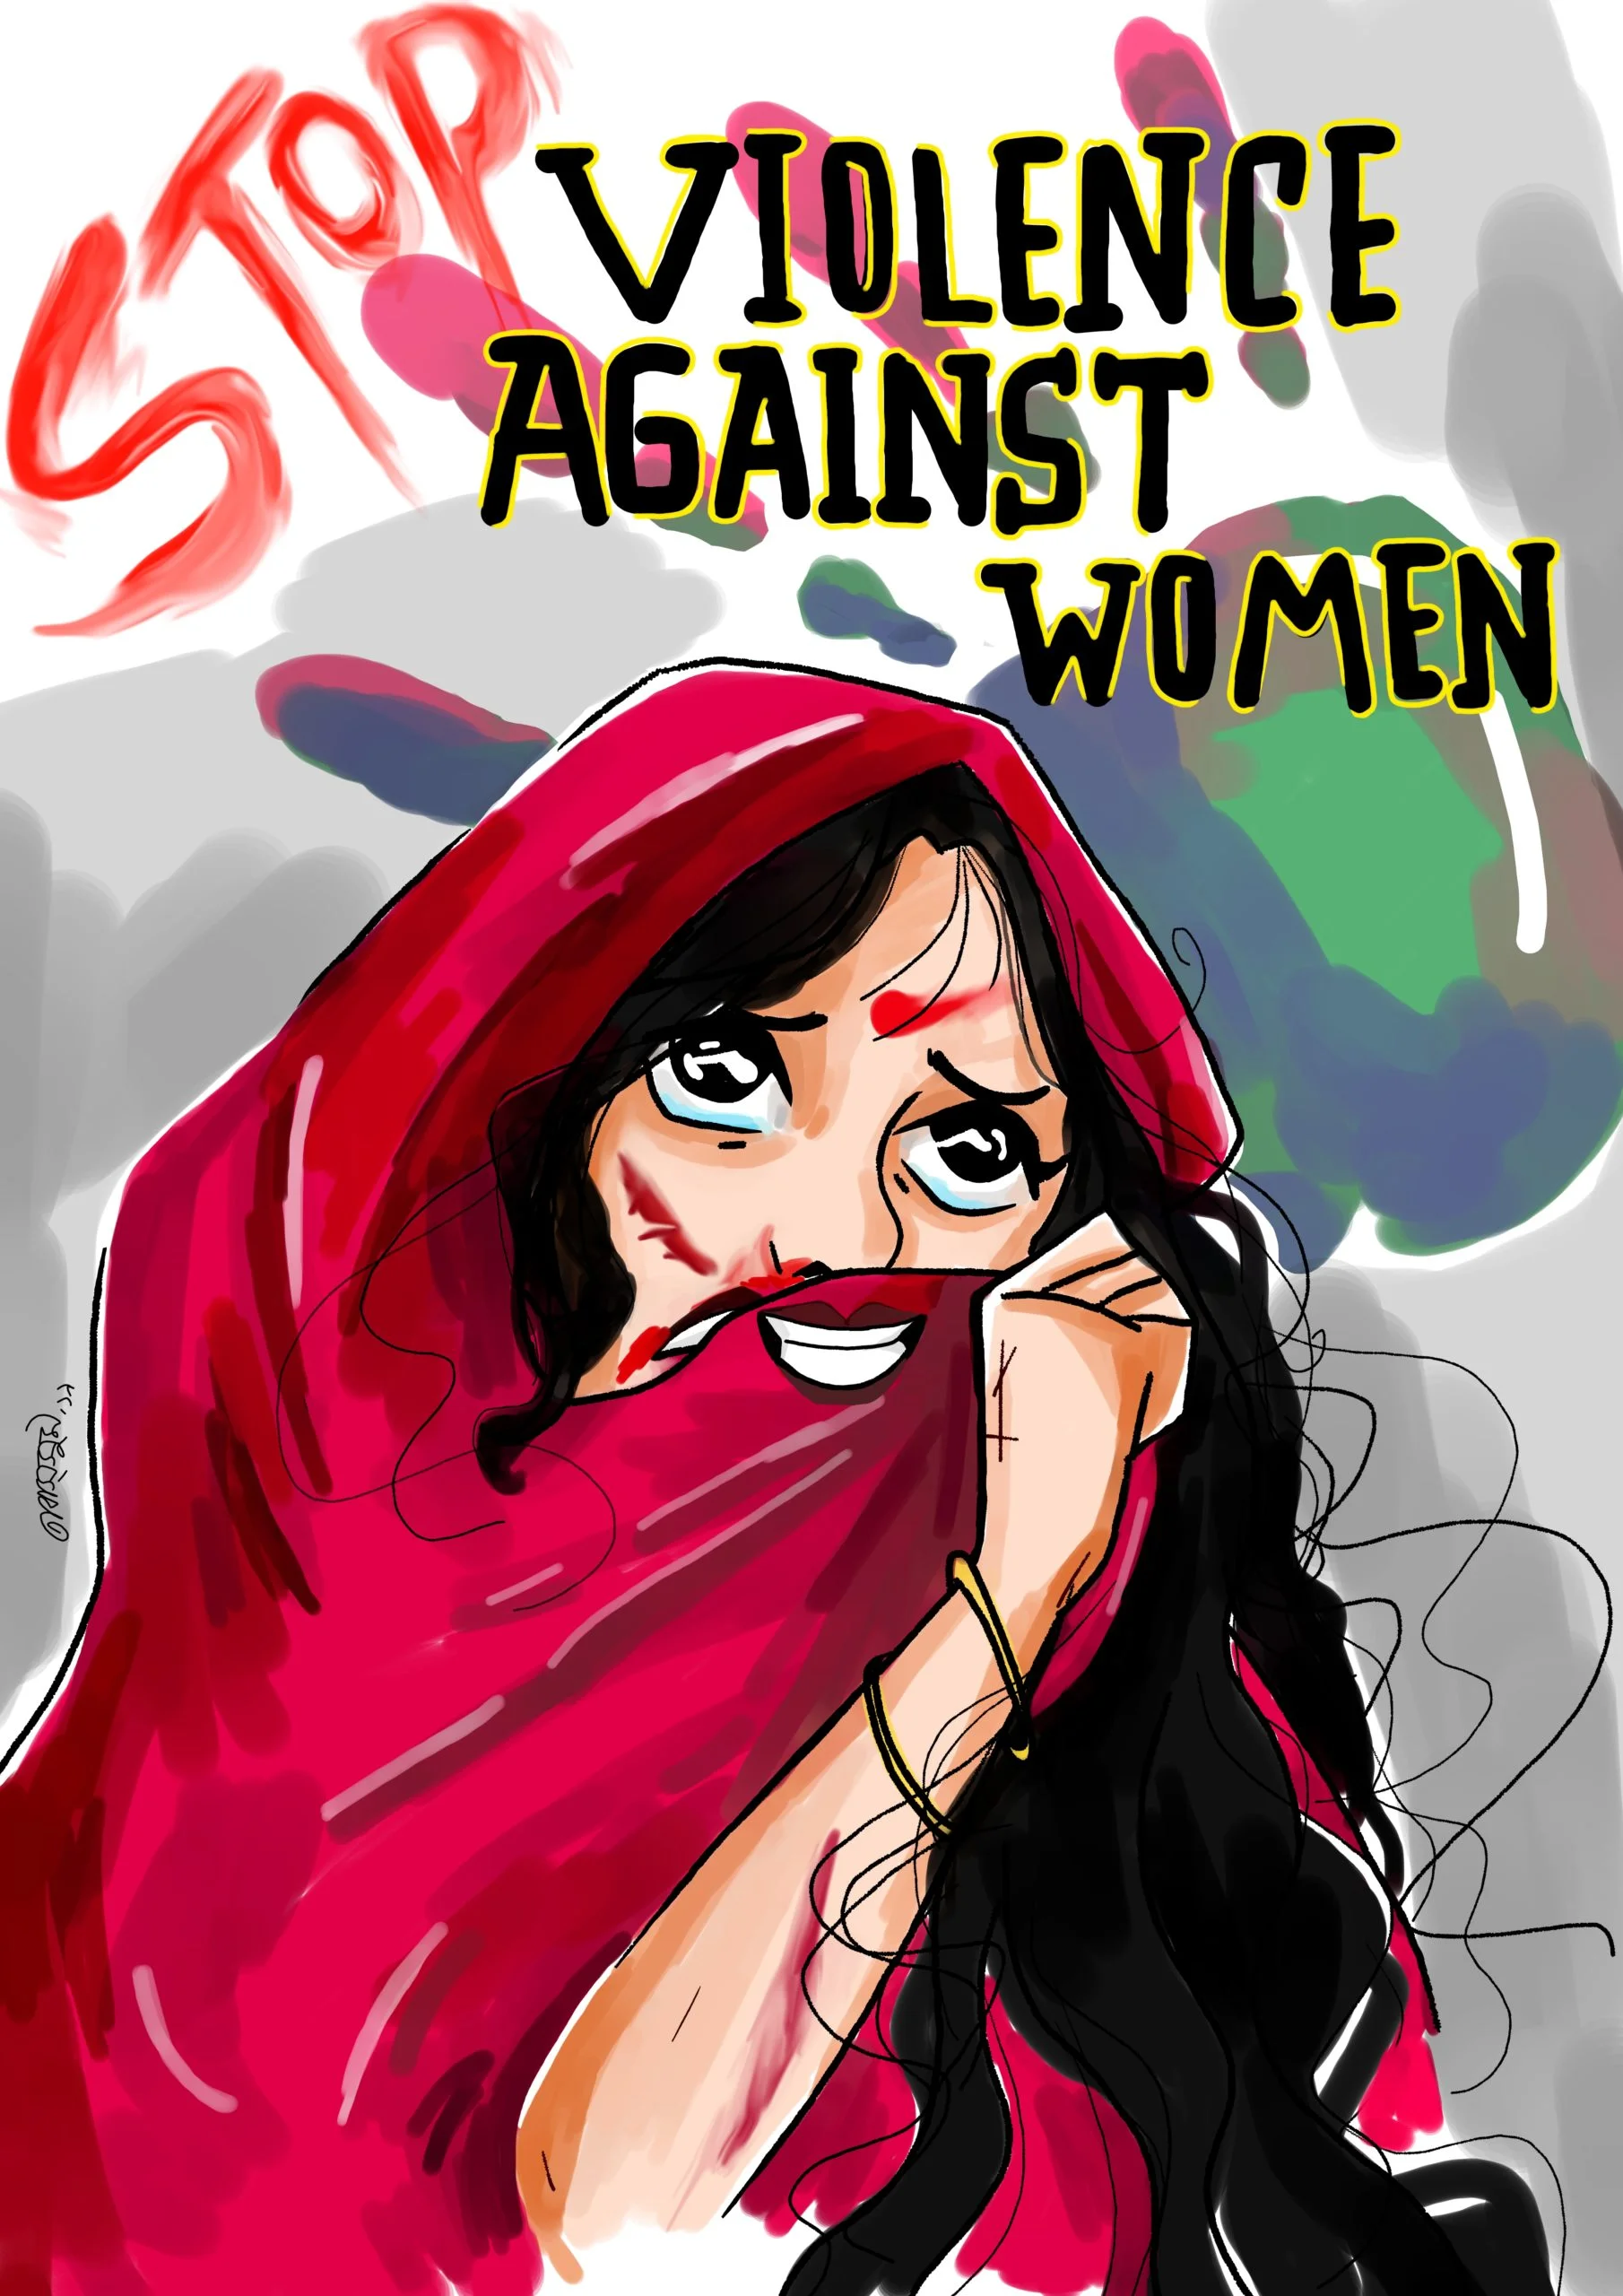 Stop Violence Against Women Stock Illustration - Illustration of women,  tears: 84198702